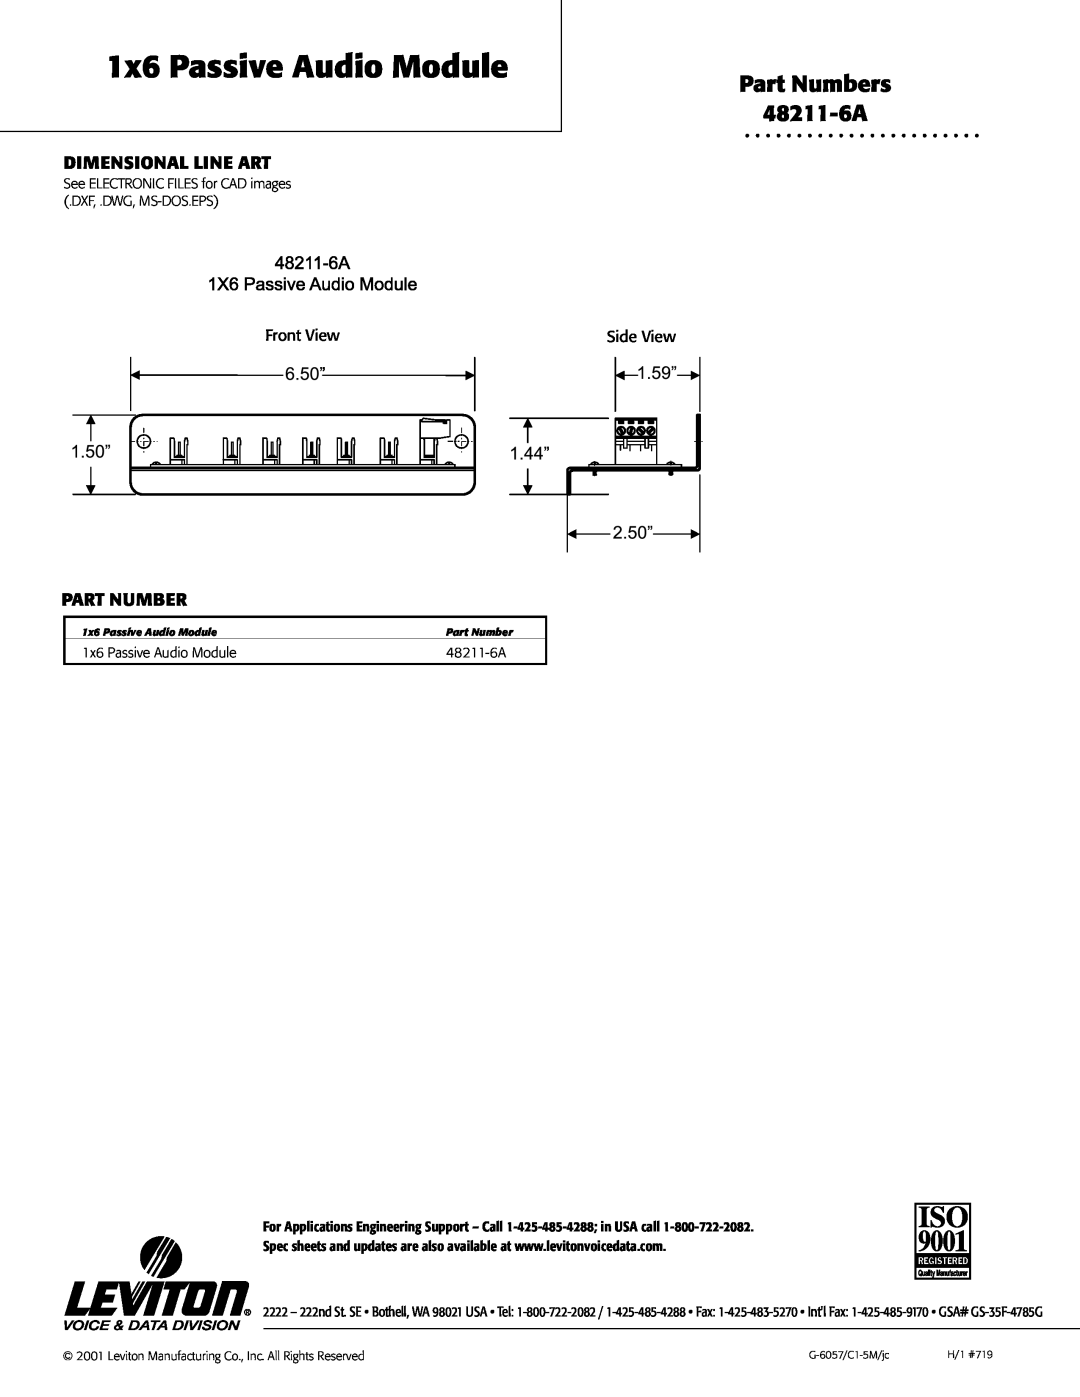 Leviton specifications Dimensional Line Art, 1x6 Passive Audio Module, Part Numbers 48211-6A 